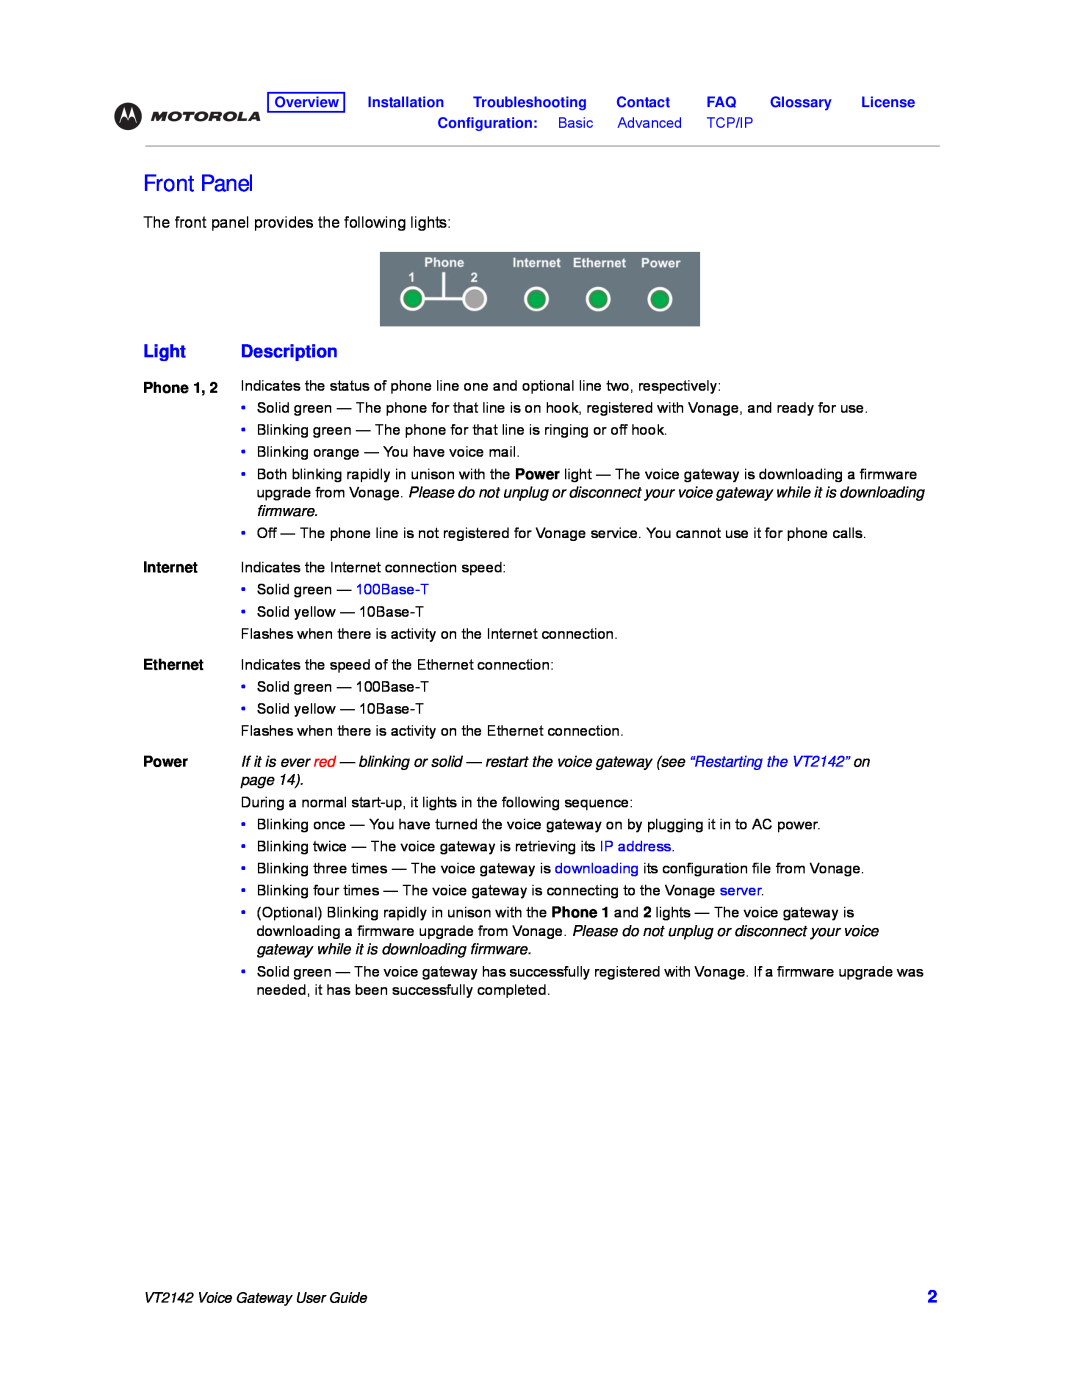 Motorola manual Front Panel, Light, Description, Configuration Basic Advanced TCP/IP, VT2142 Voice Gateway User Guide 